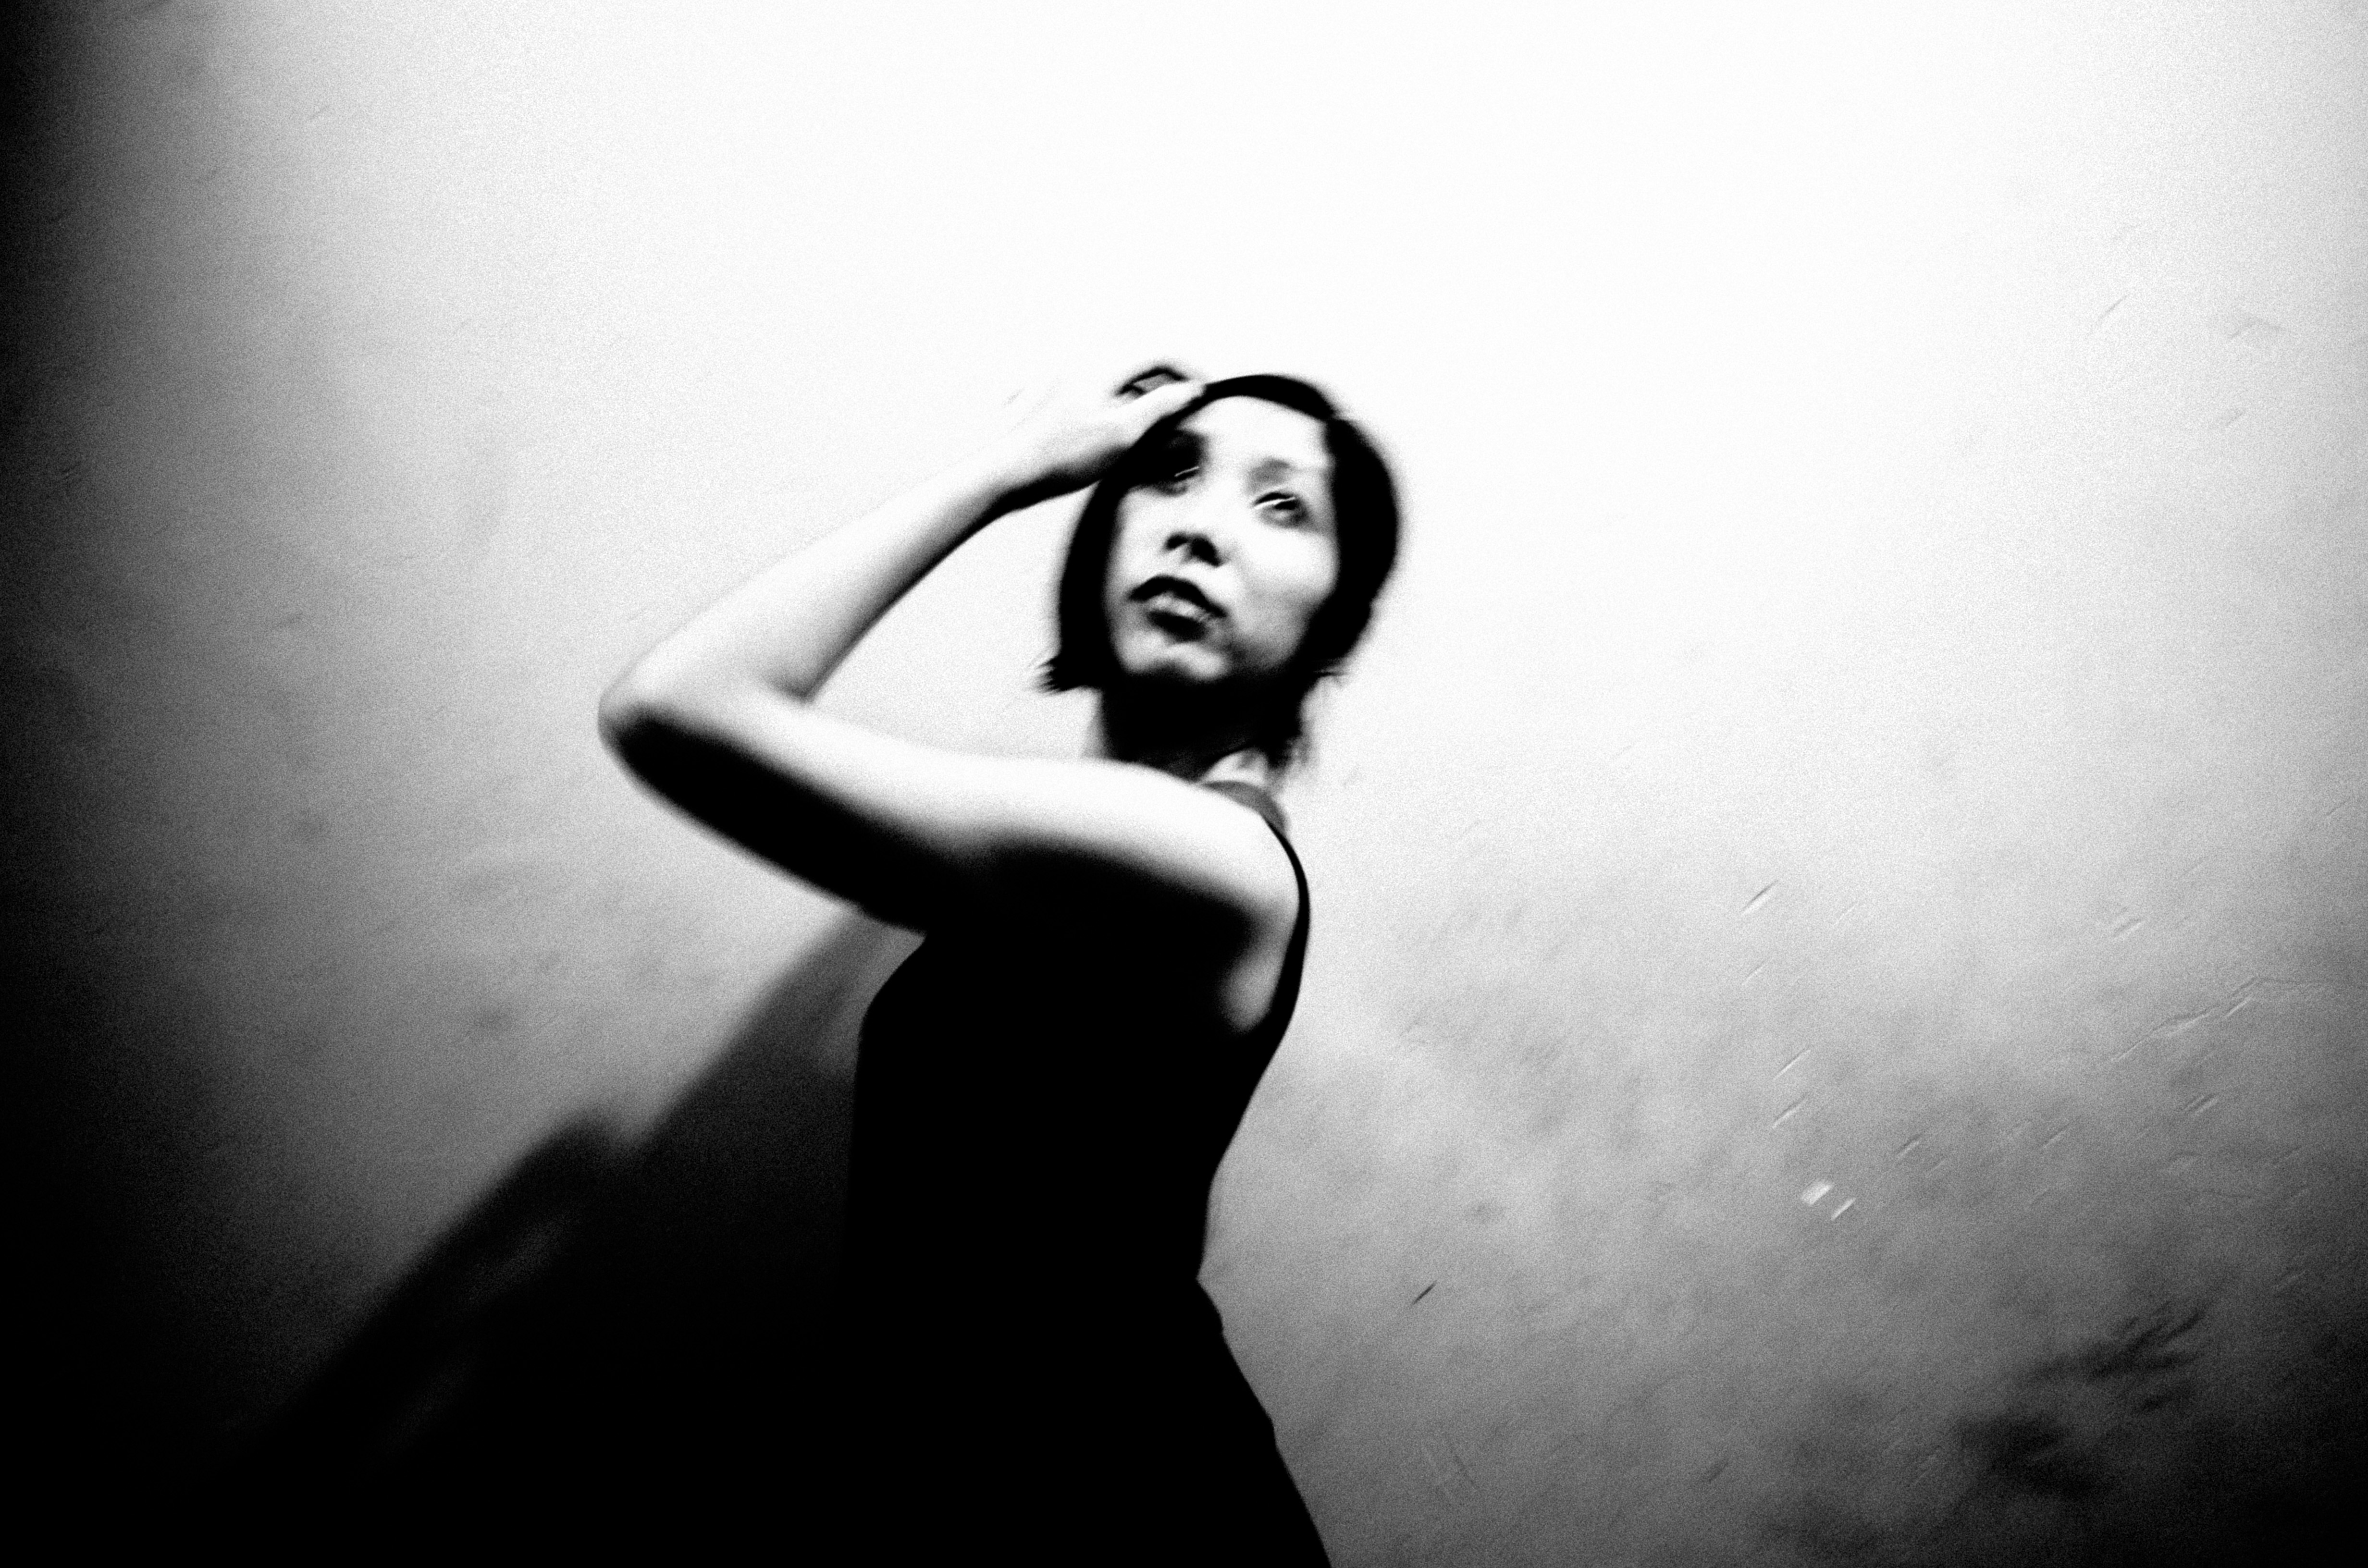 Cindy blur. Saigon, 2017